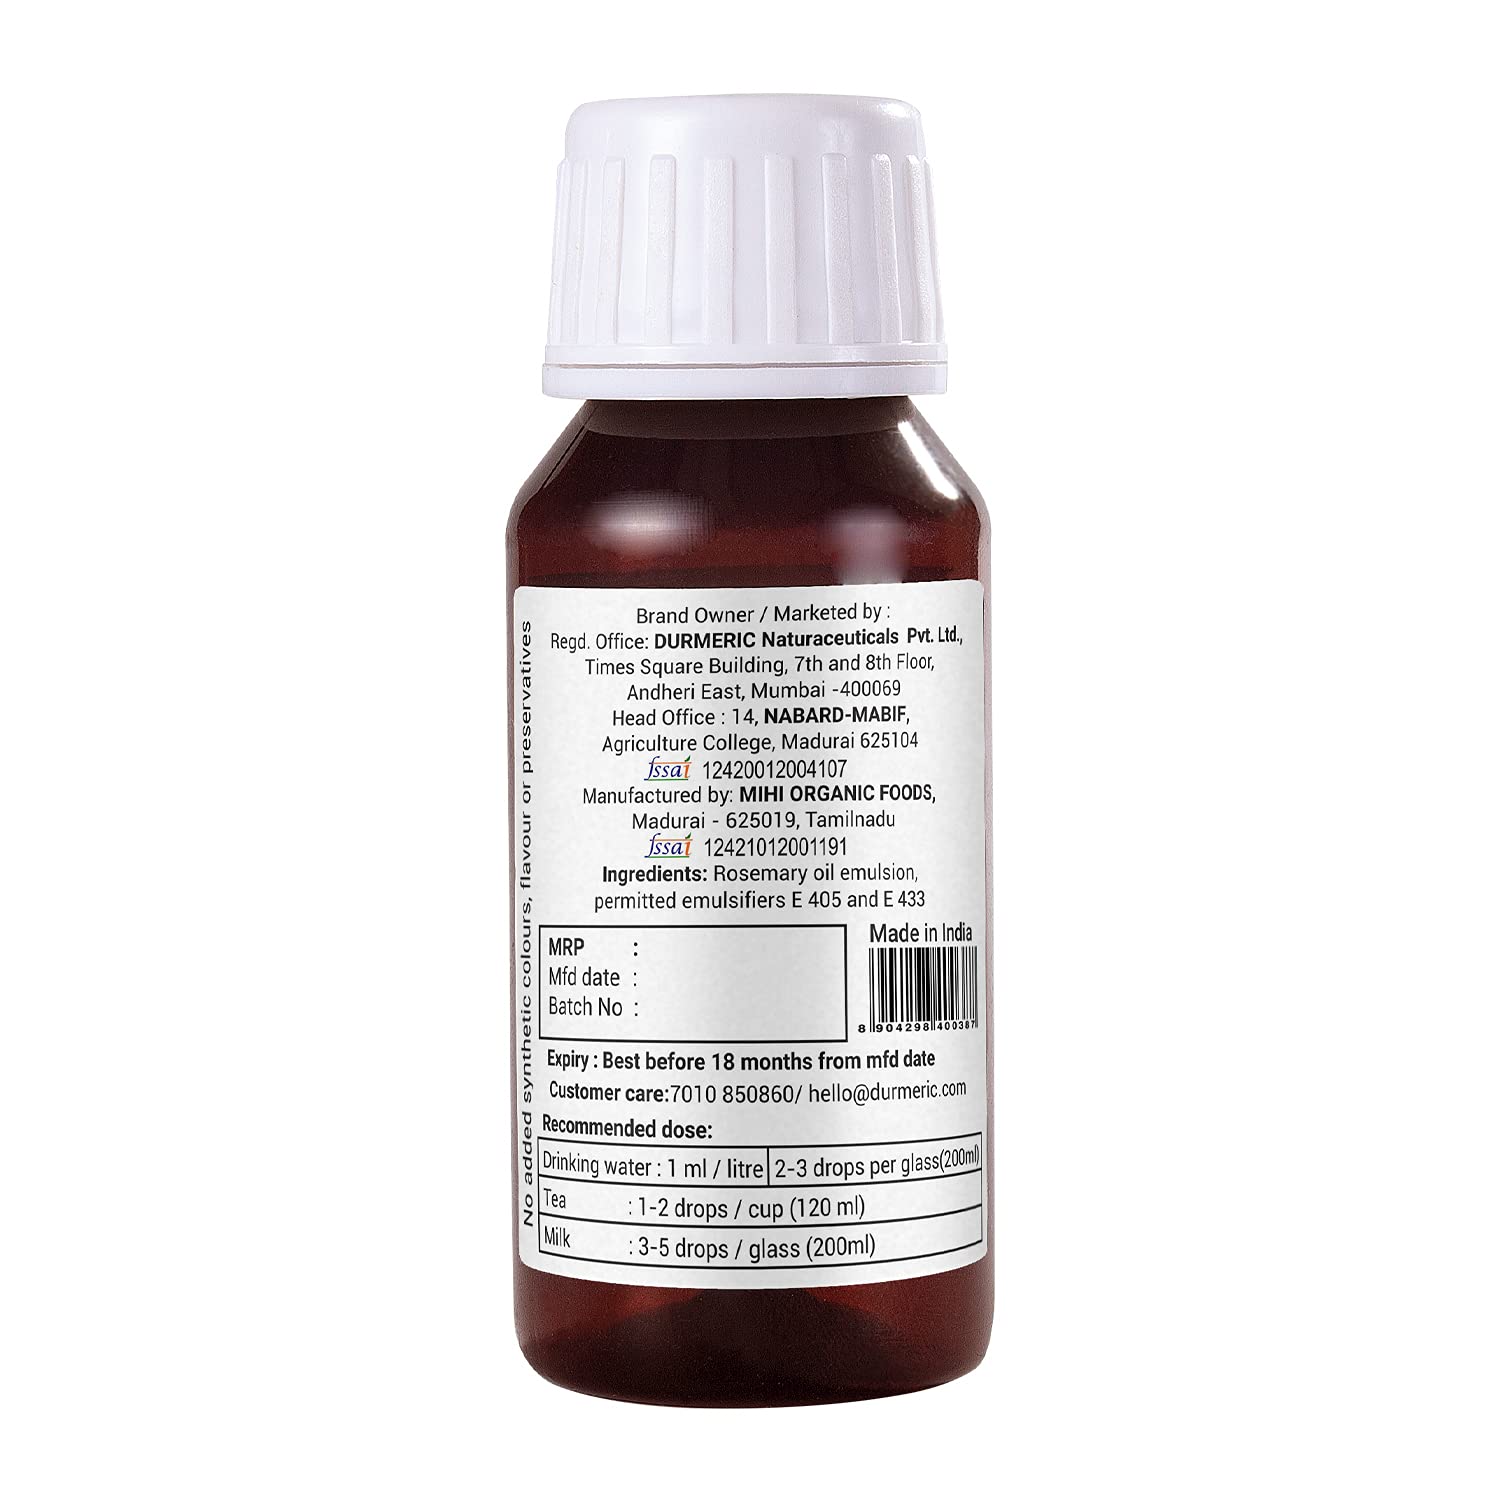 Durmeric Onedrop Intensive Rosemary Herbal Drops - 60 Ml 